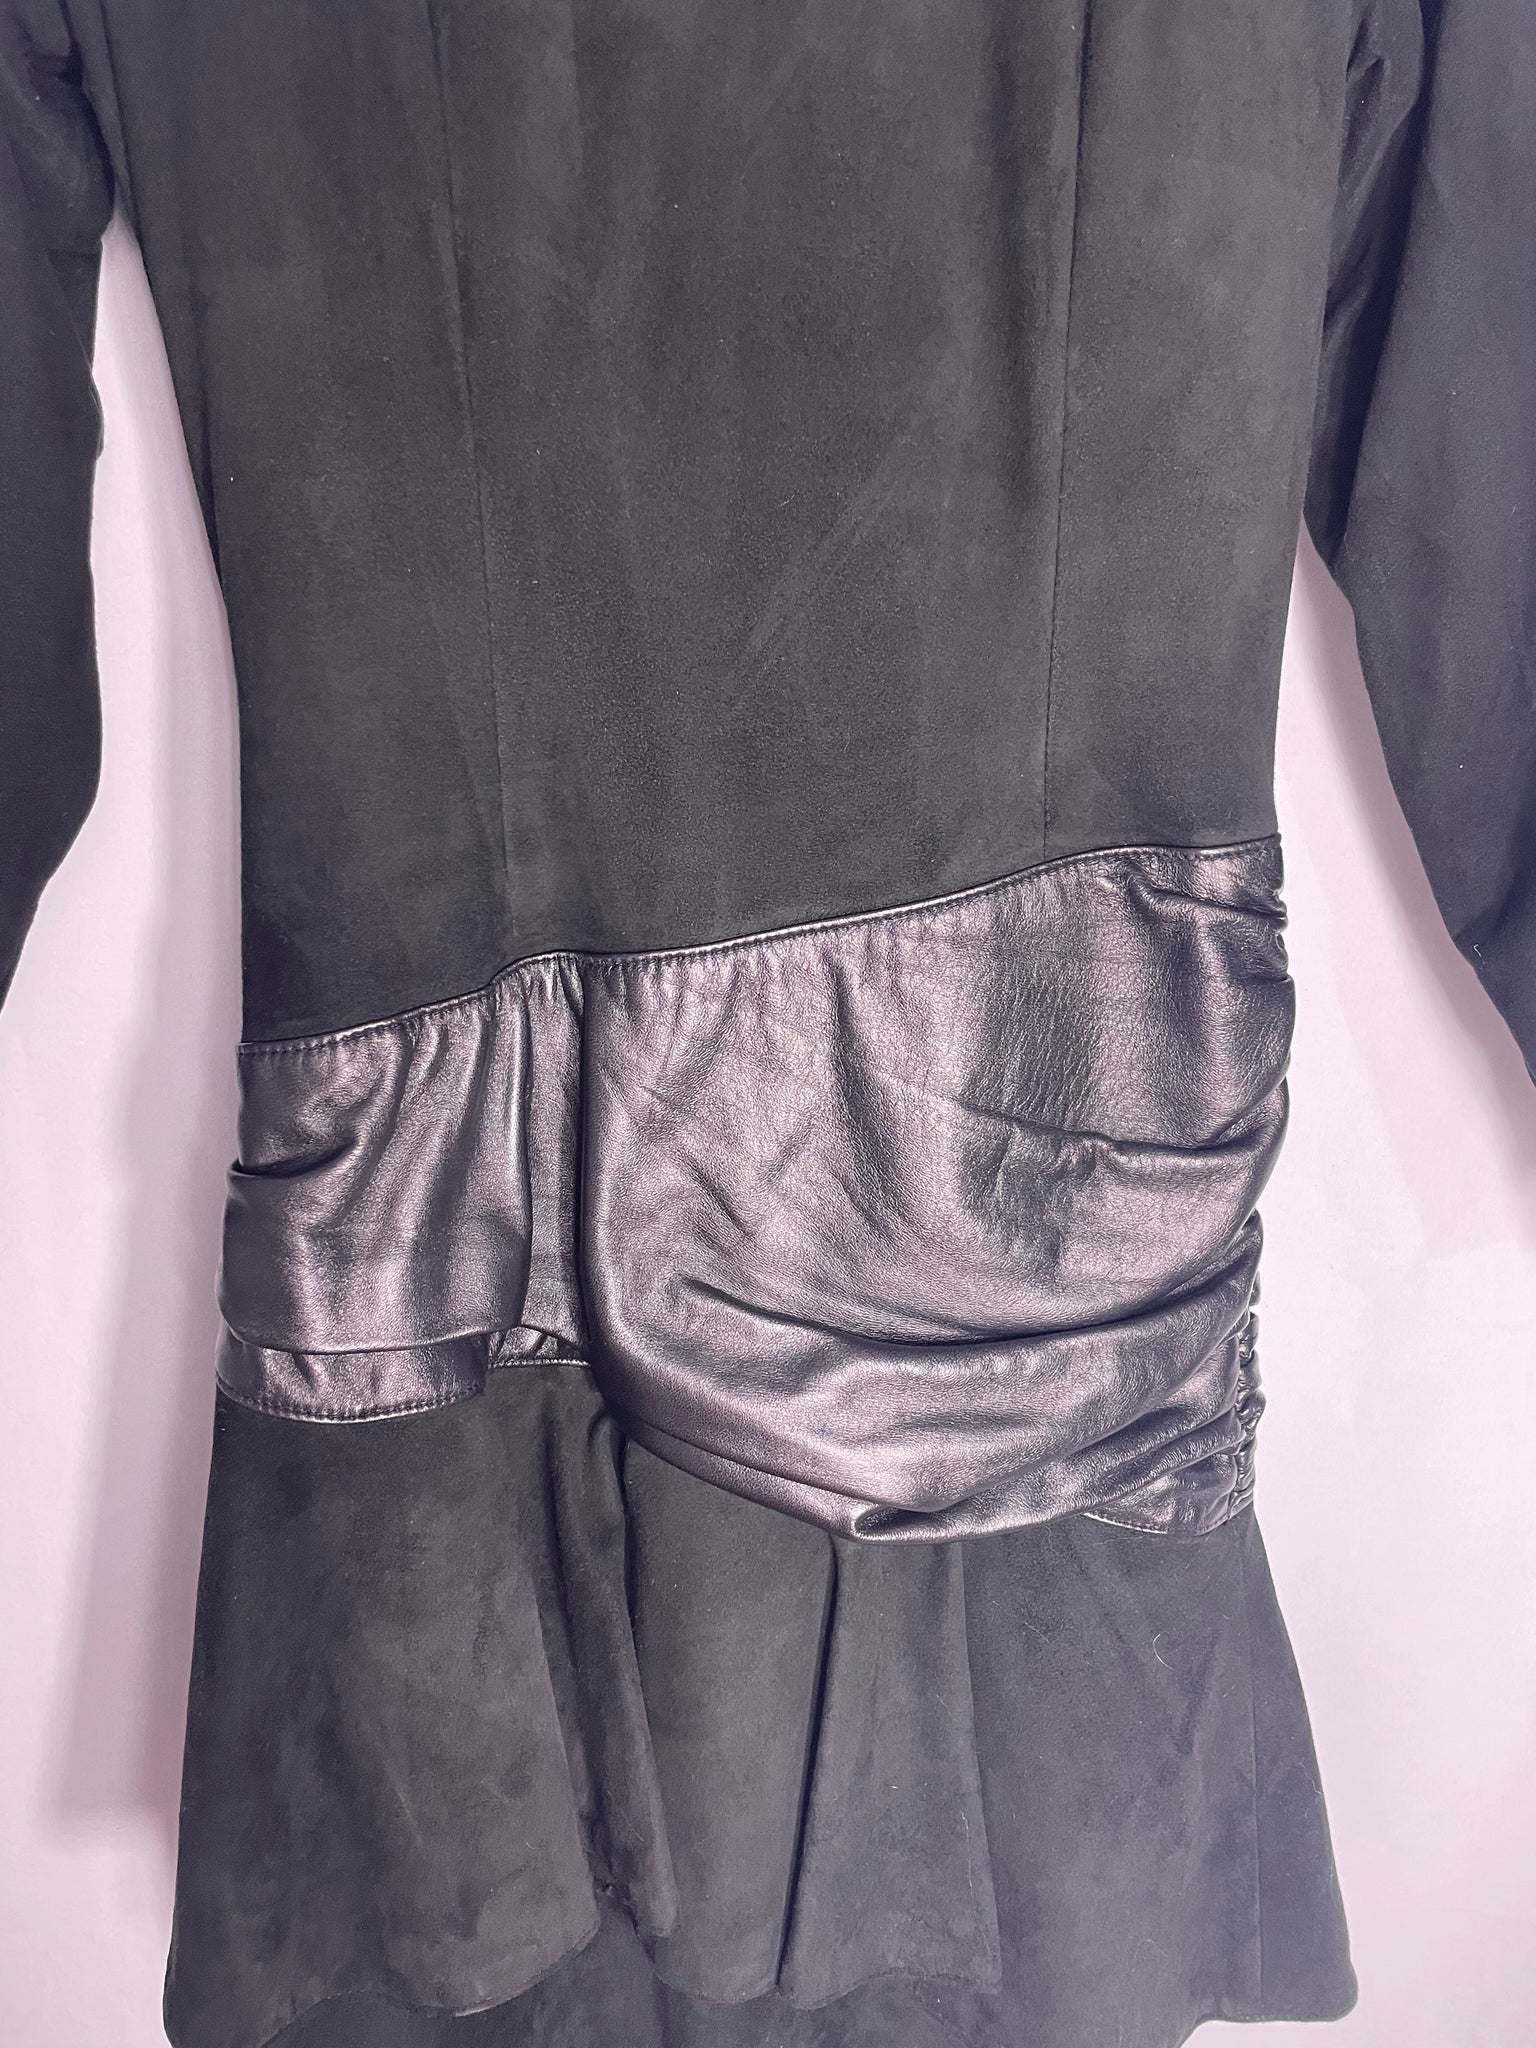 Vintage 80s Vakko leather dress, Size 4